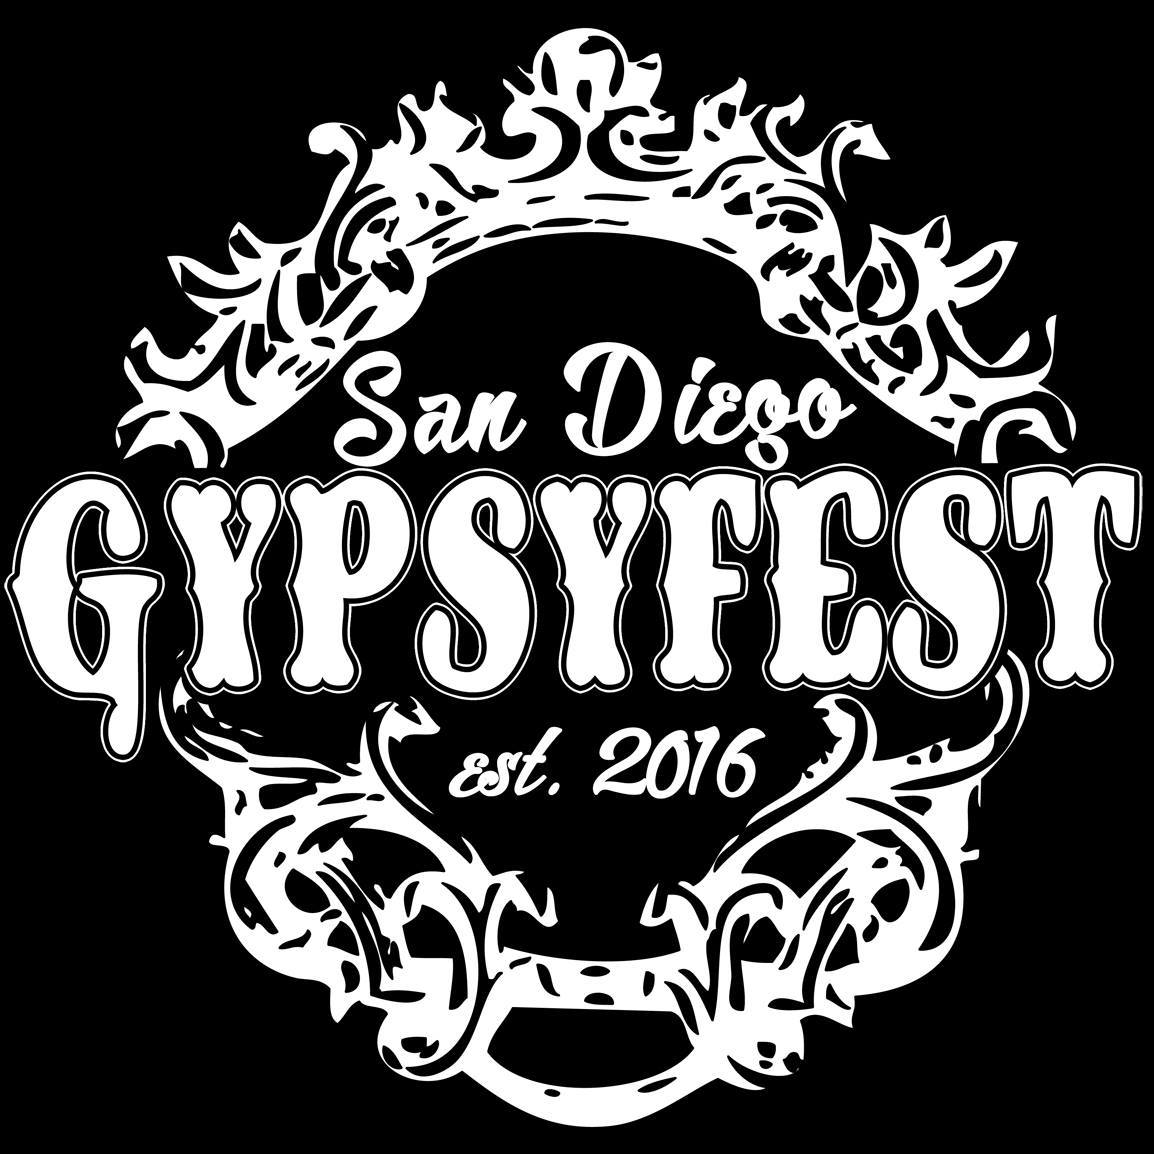 San Diego Festivals